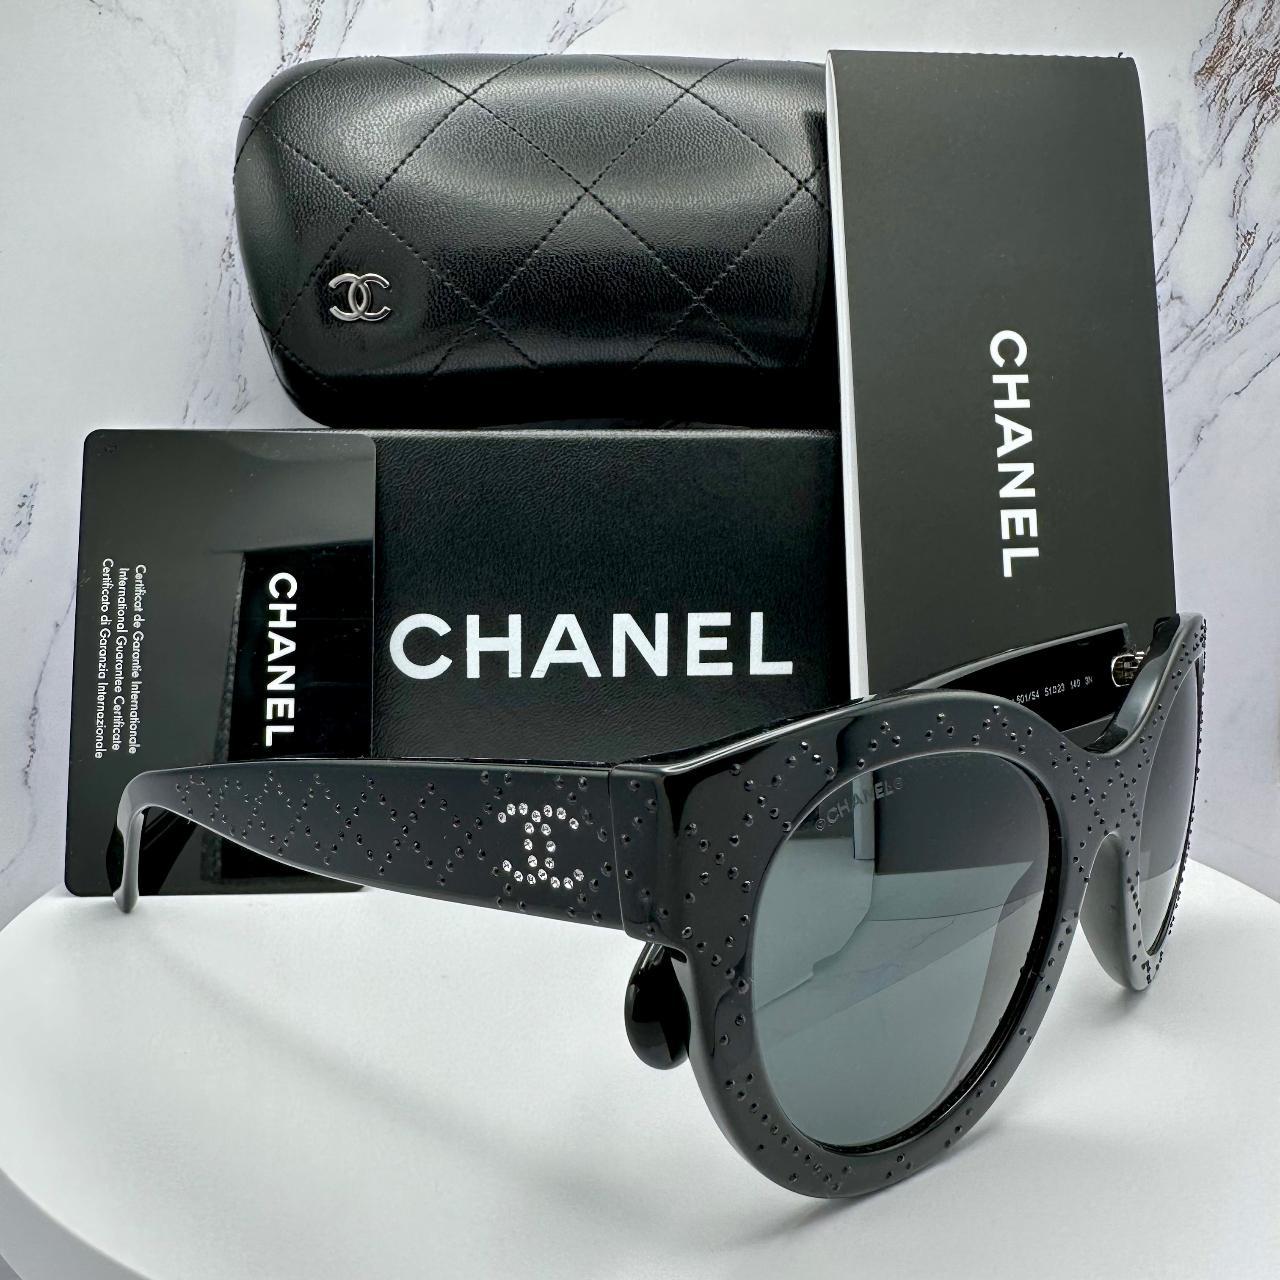 Chanel New Sunglasses - Depop